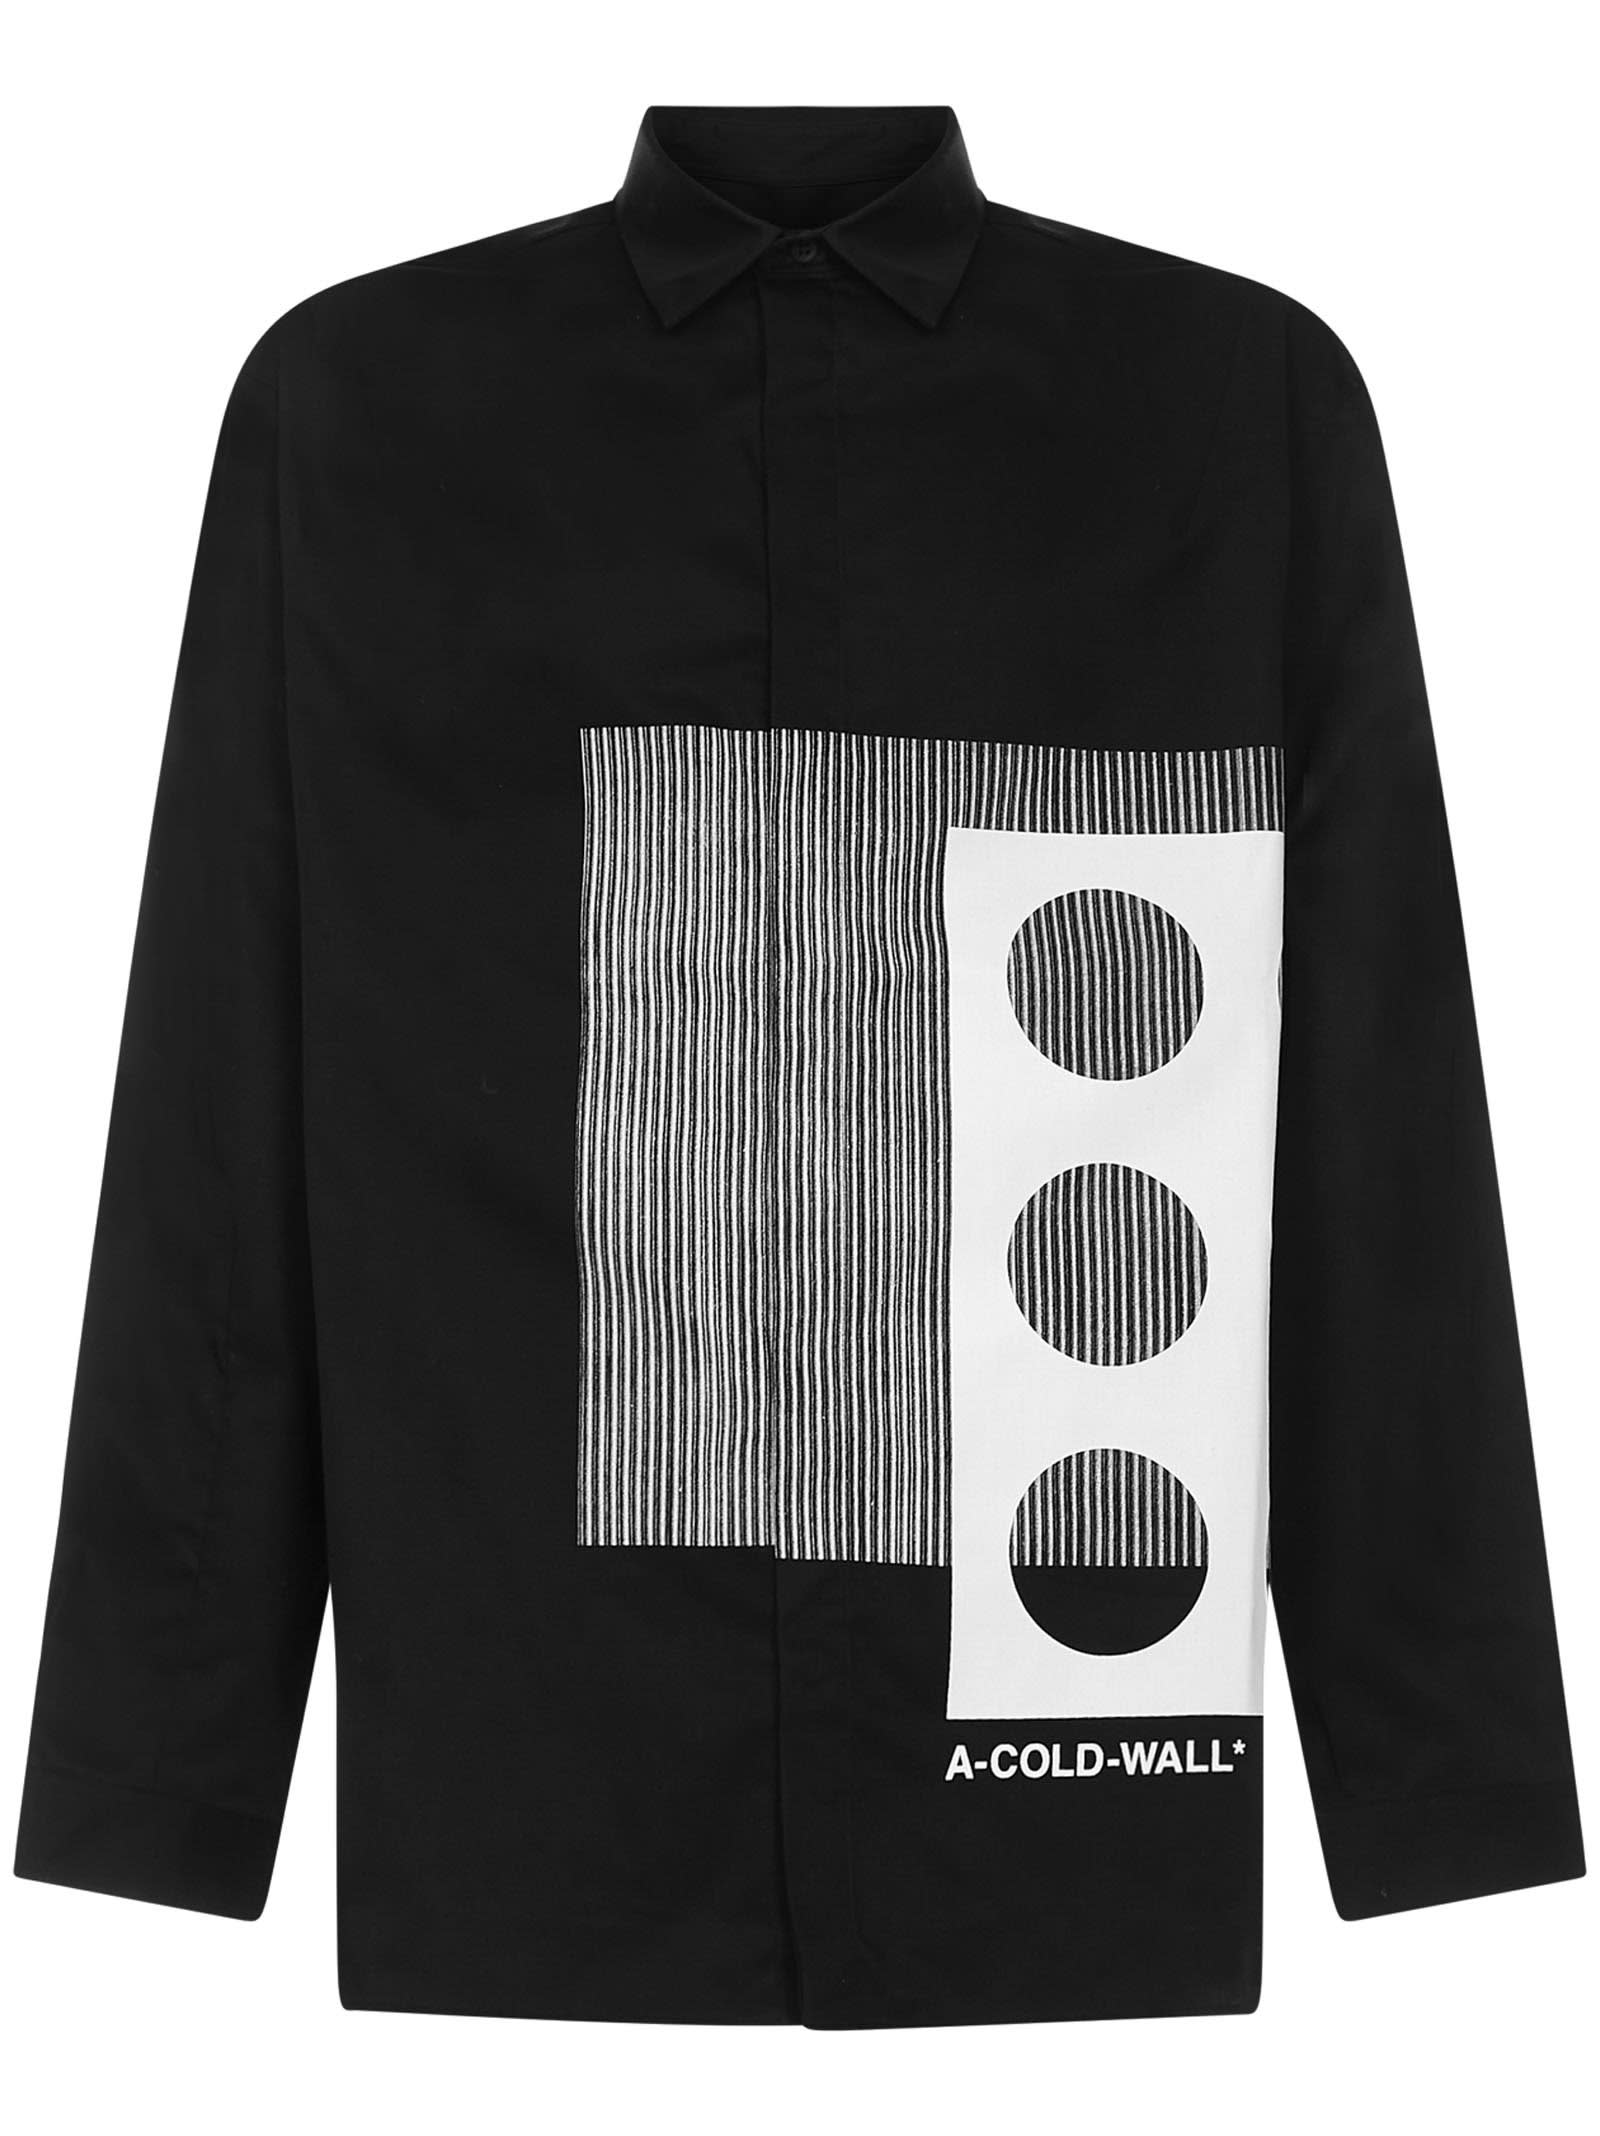 A-COLD-WALL A Cold Wall Geometric Shirt